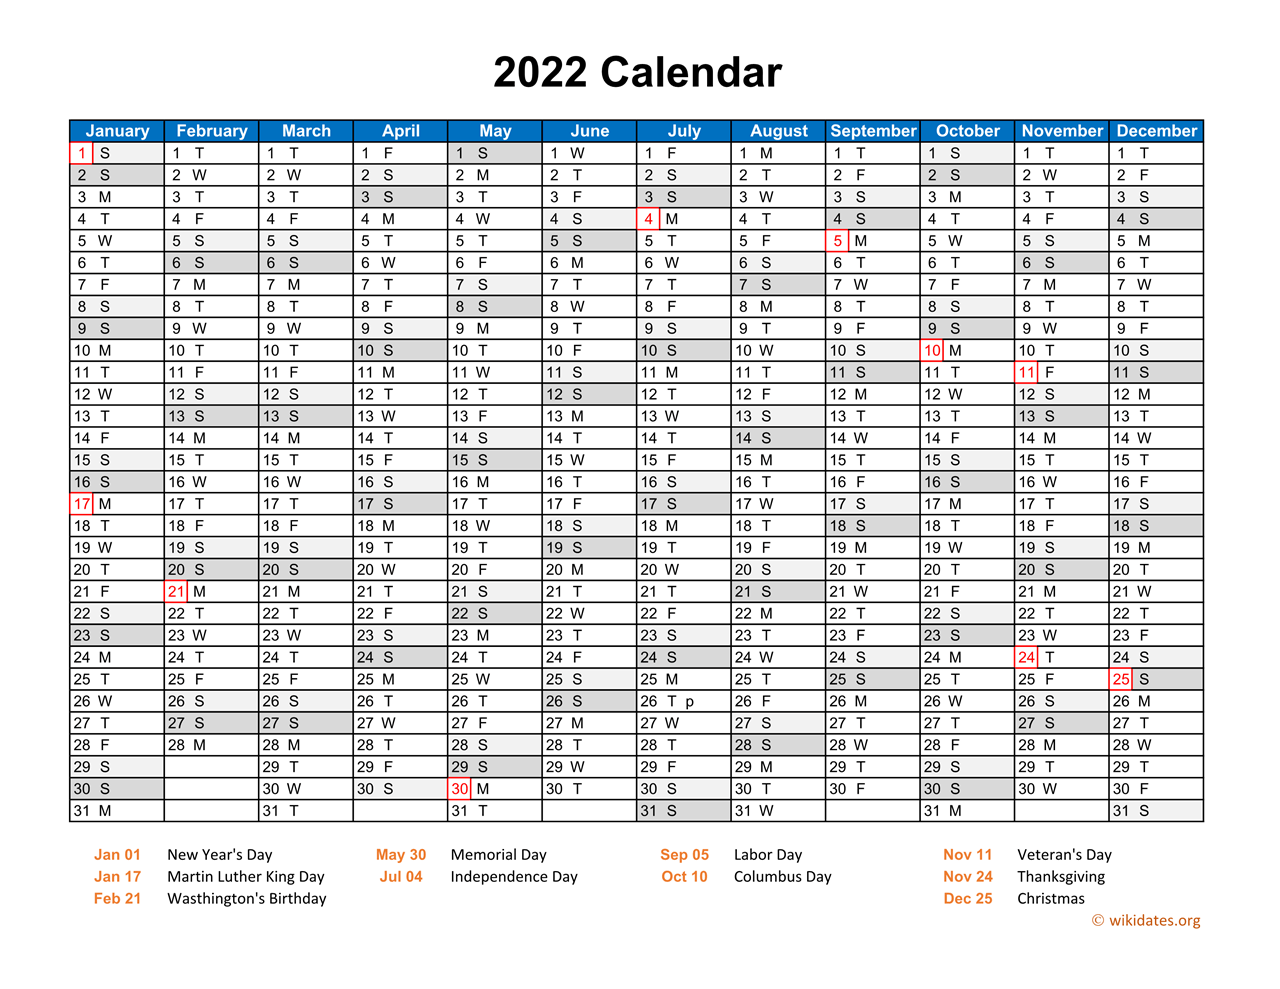 2022-calendar-horizontal-one-page-wikidates